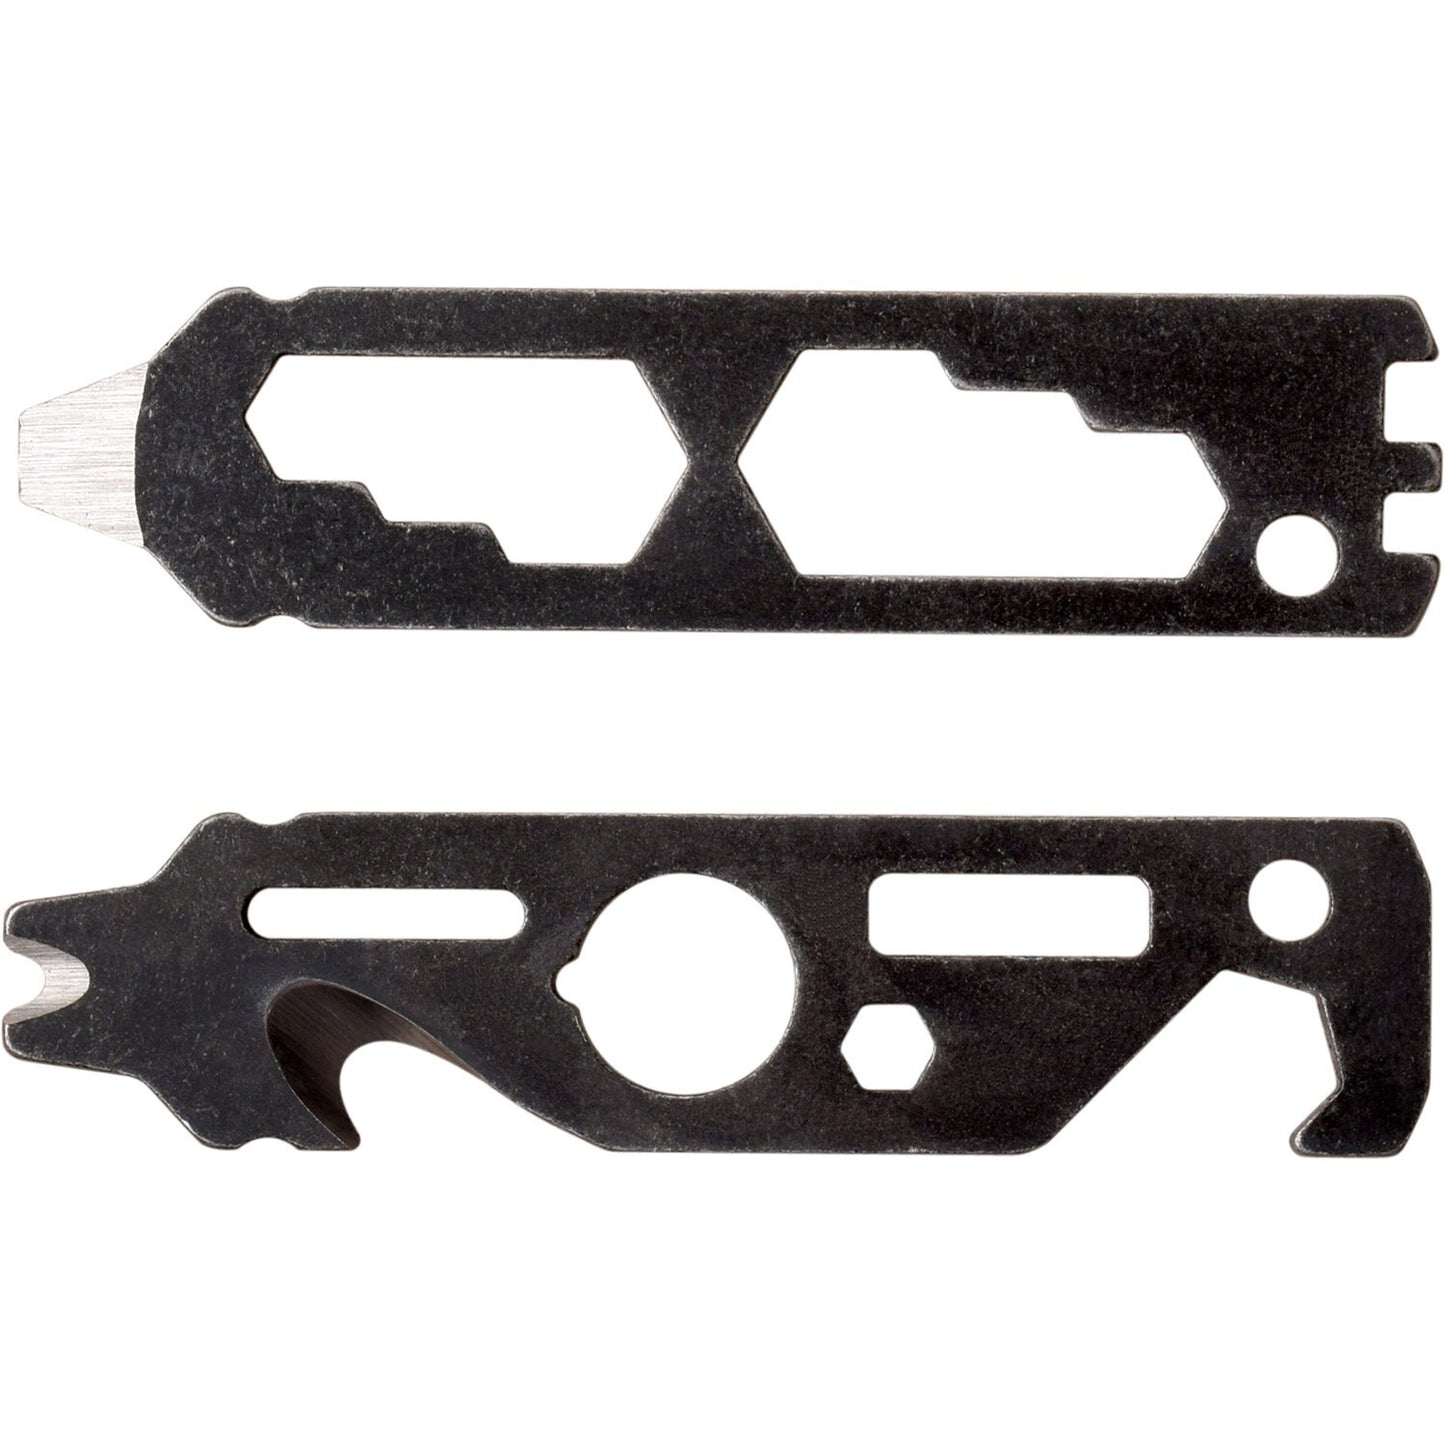 Mtech Mtech Sheepsfoot Multi-Tool Fine Edge Folding Blade Knife - Blue 8 Inches Overall #mt-1104Bl Dark Slate Gray